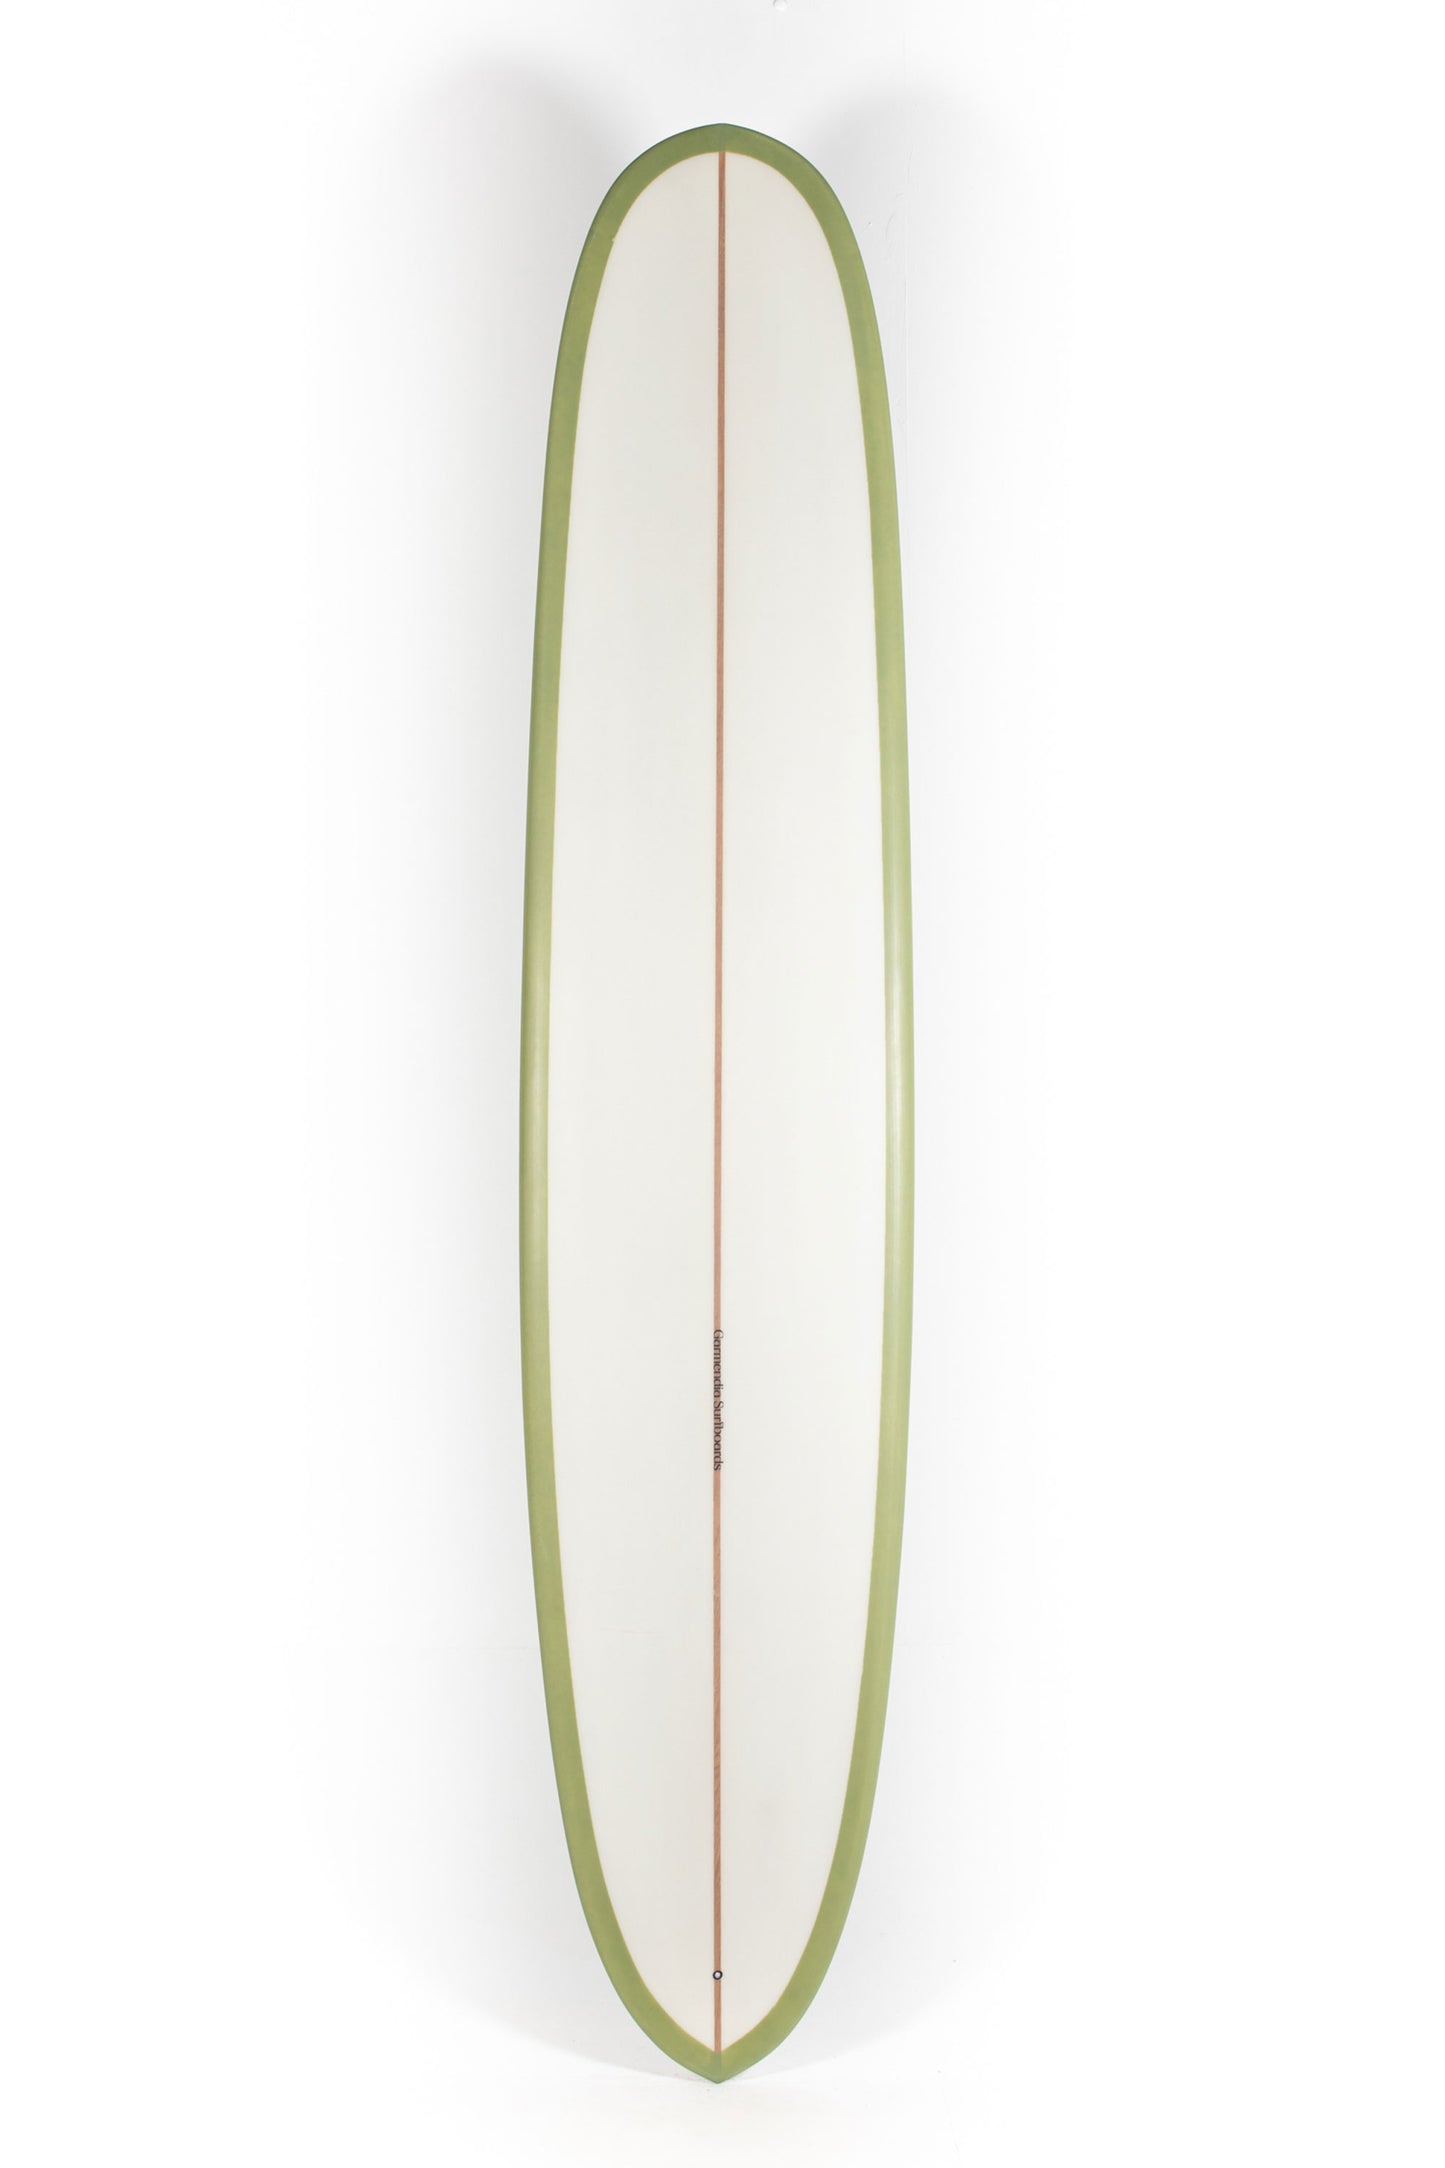 Pukas Surf Shop - Garmendia Surfboards - HAPPY BUDDHA - 9'4" x 23 x 3 - Ref:HAPPYBUDDHA94